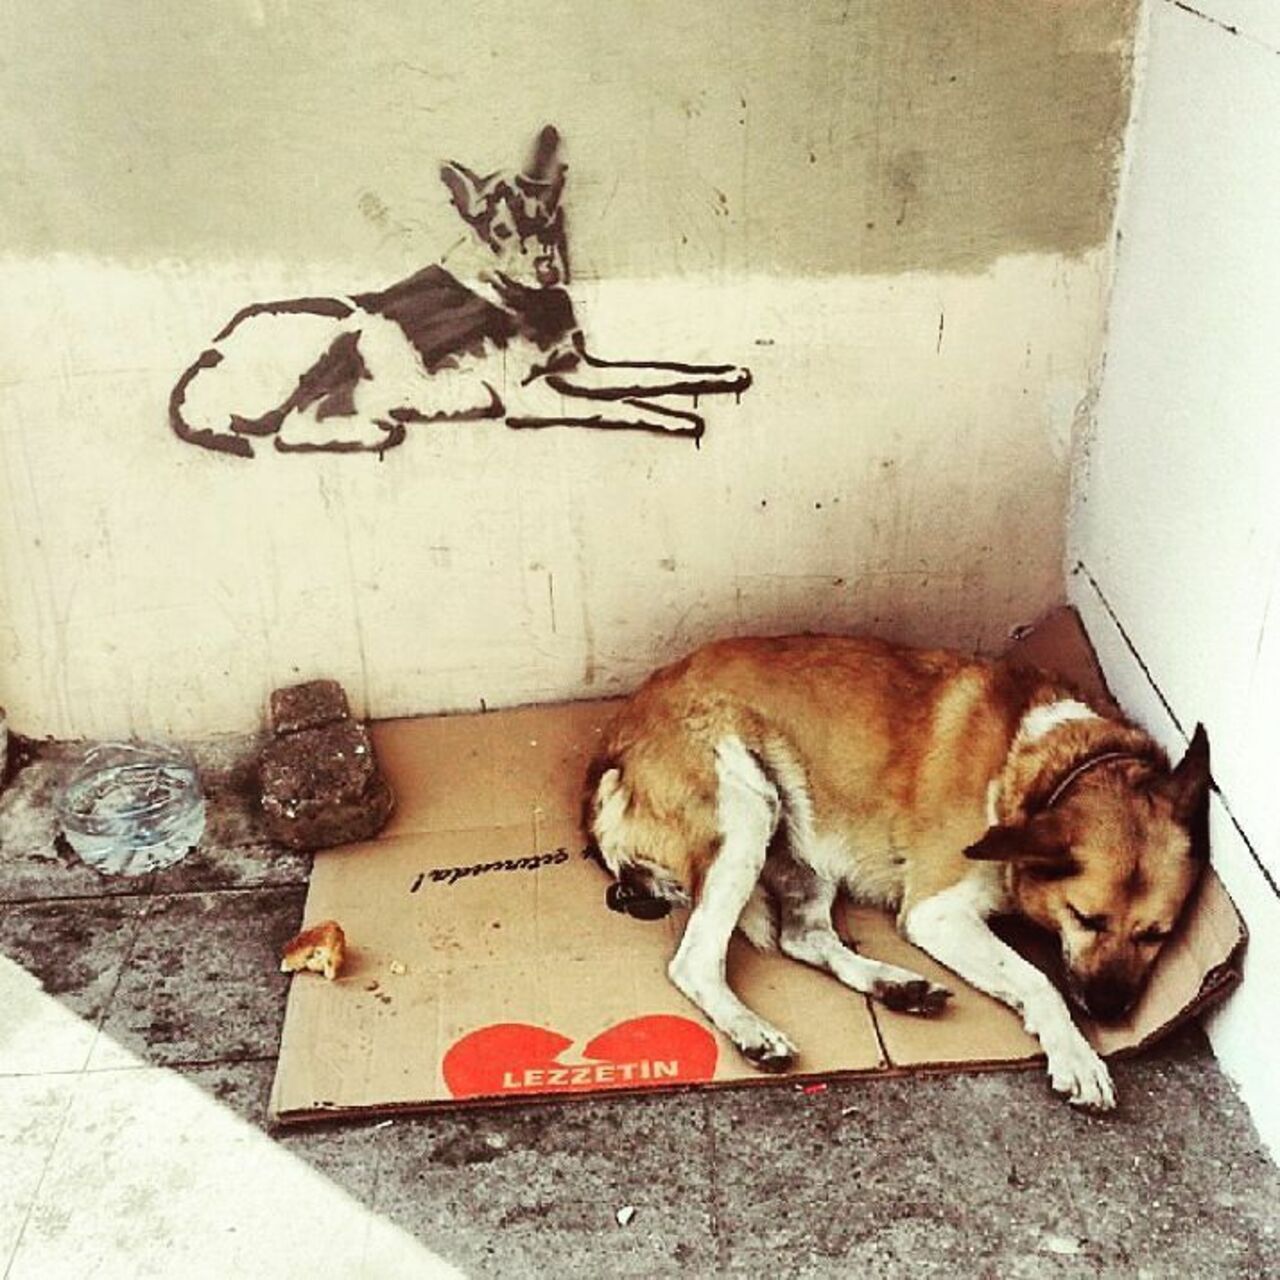 RT @StArtEverywhere: #tv_sa_animals2 #dsb_graff @rsa_graffiti #ingf@streetawesome #streetart #urbanart #graffitiart #graffiti #instagraf… https://t.co/1MqLsmBk29